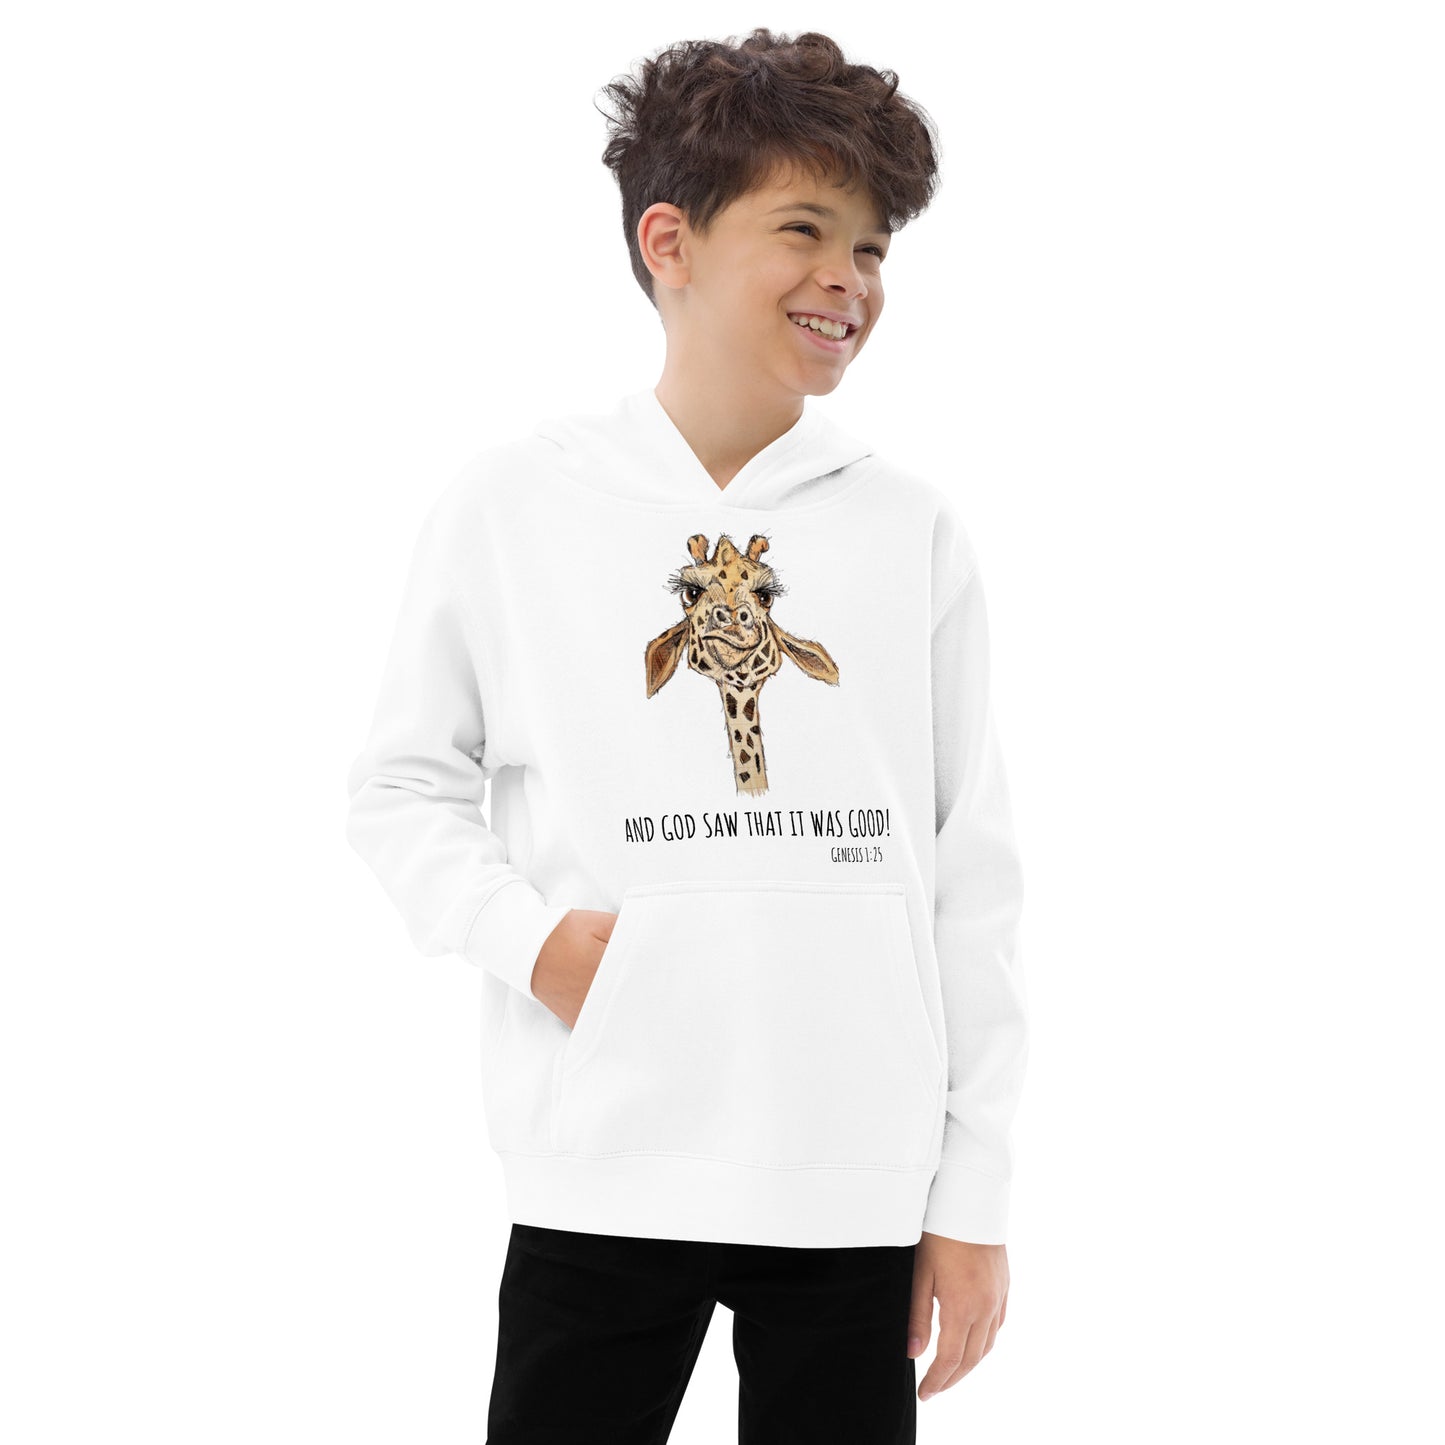 God Said "Giraffe" Kids fleece hoodie